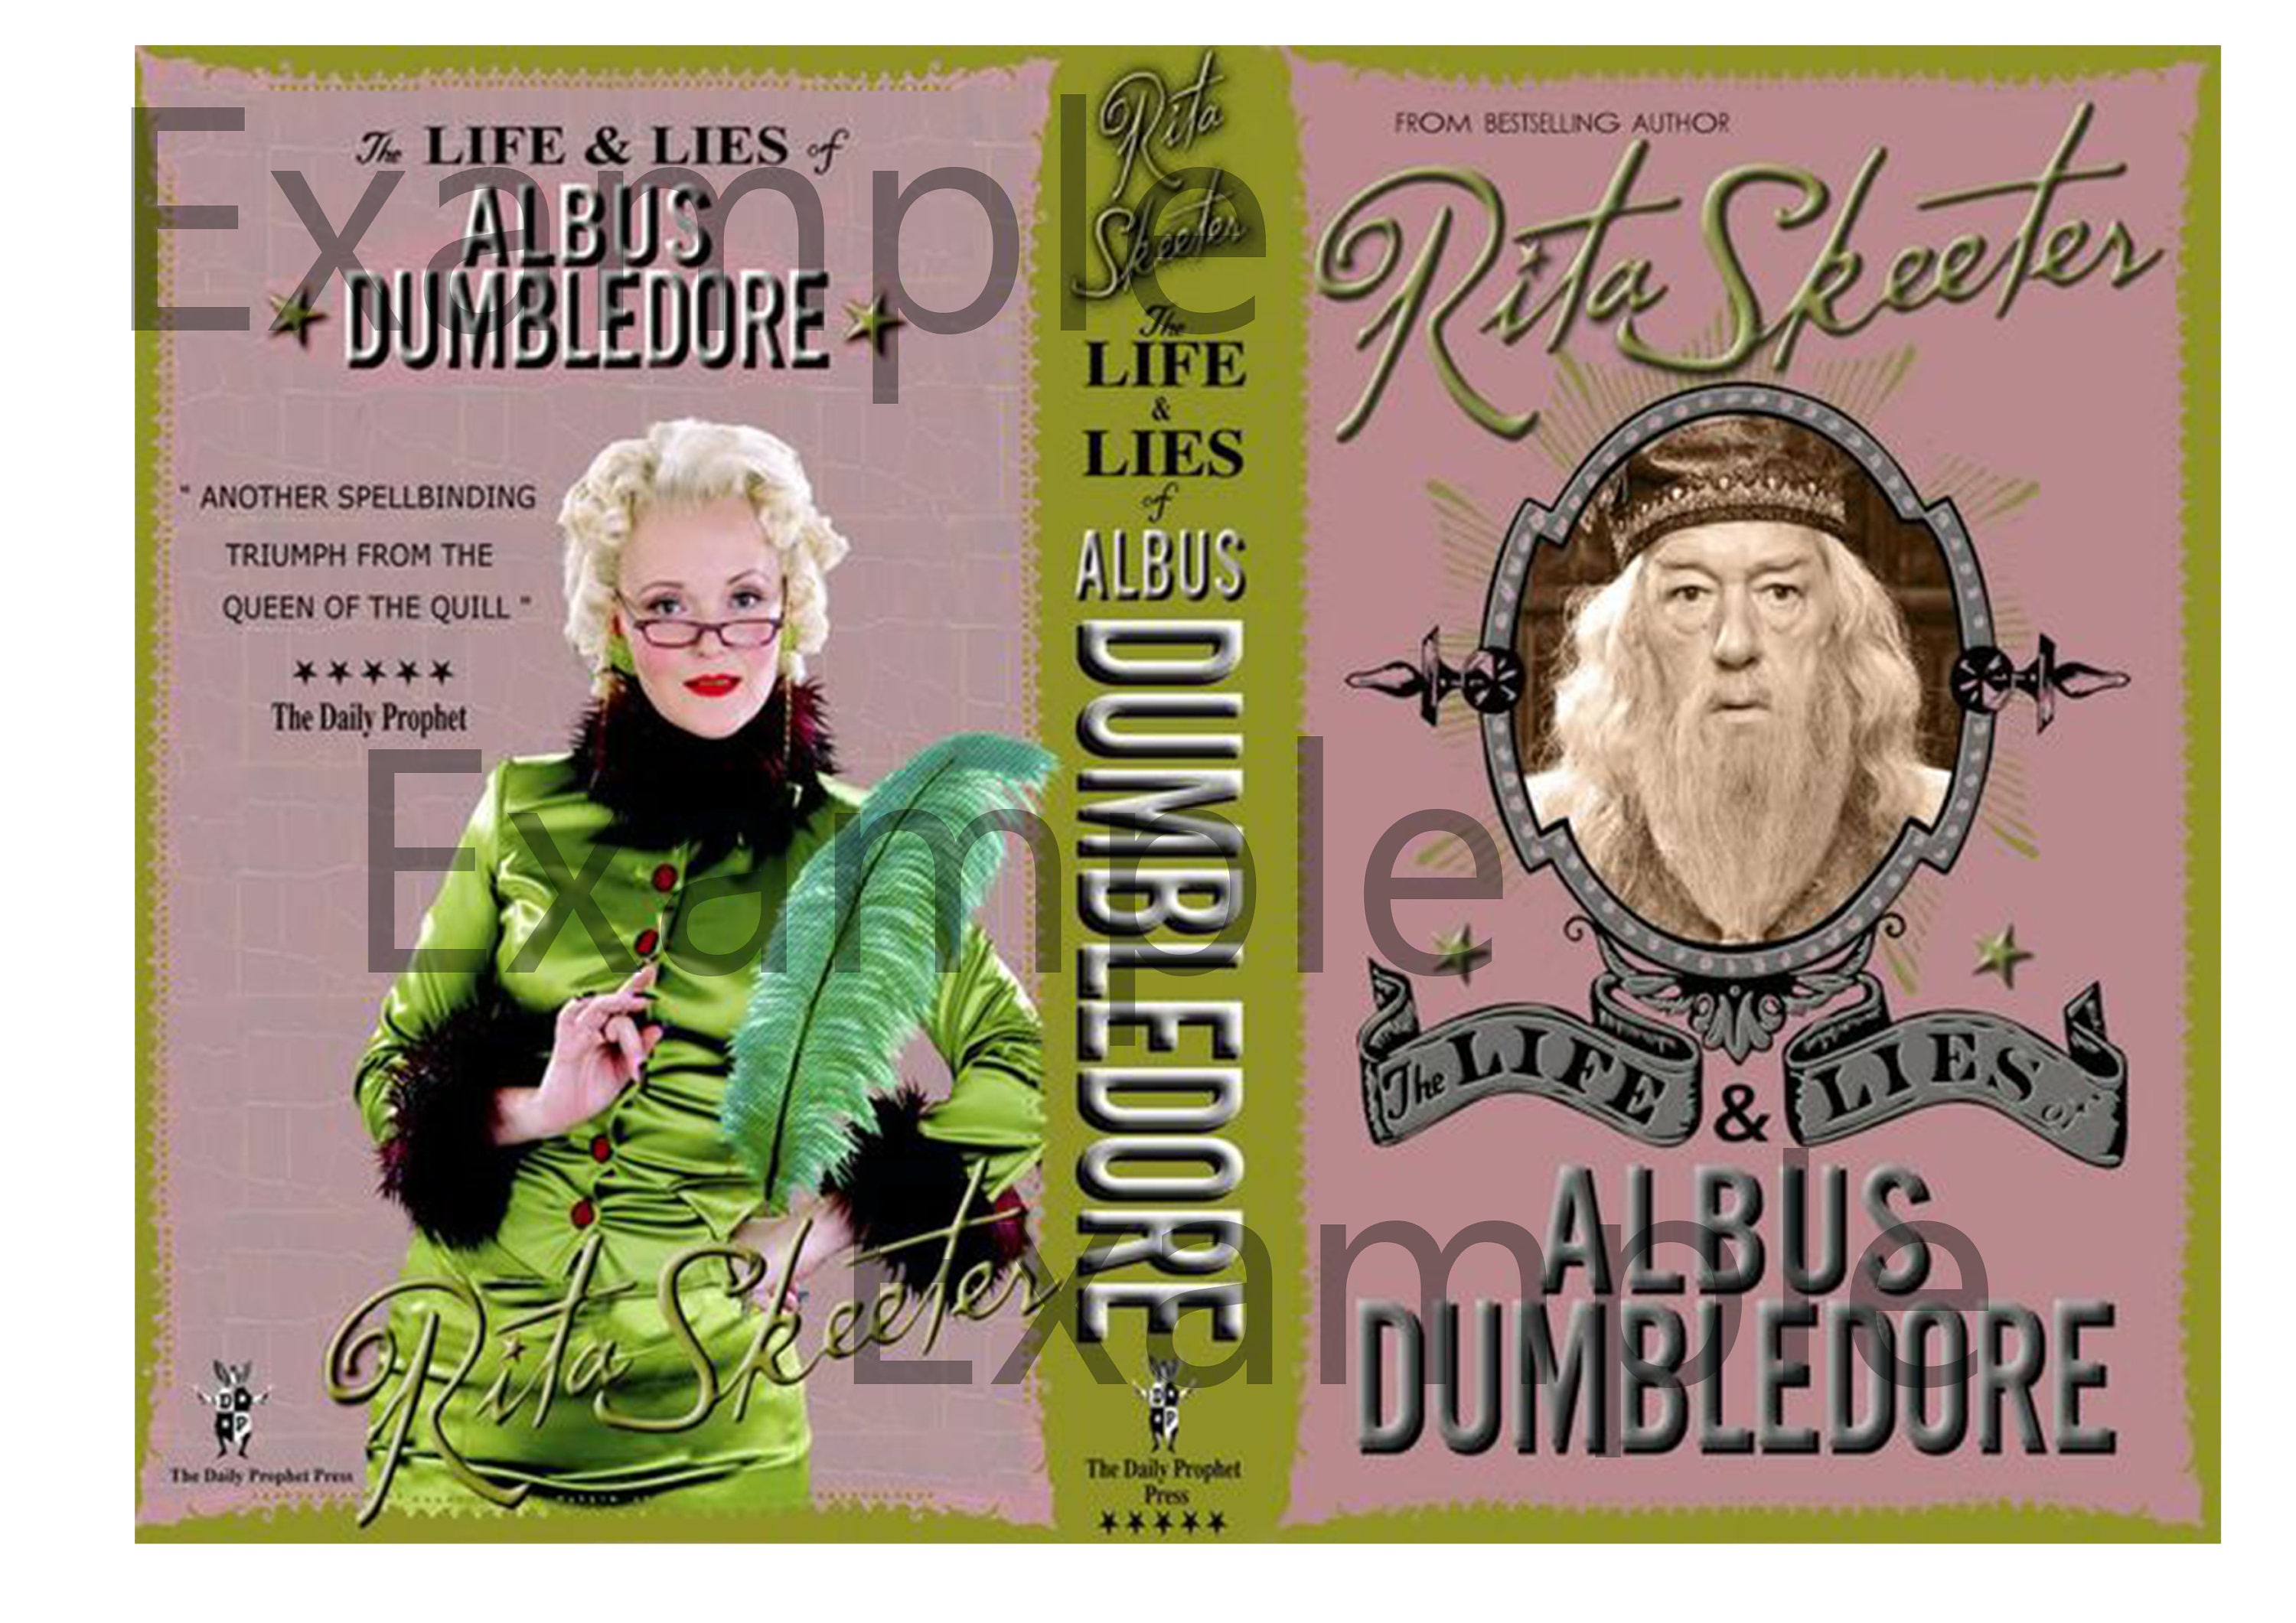 Harry Potter Printable Book Covers: Rita Skeeter Life and lies